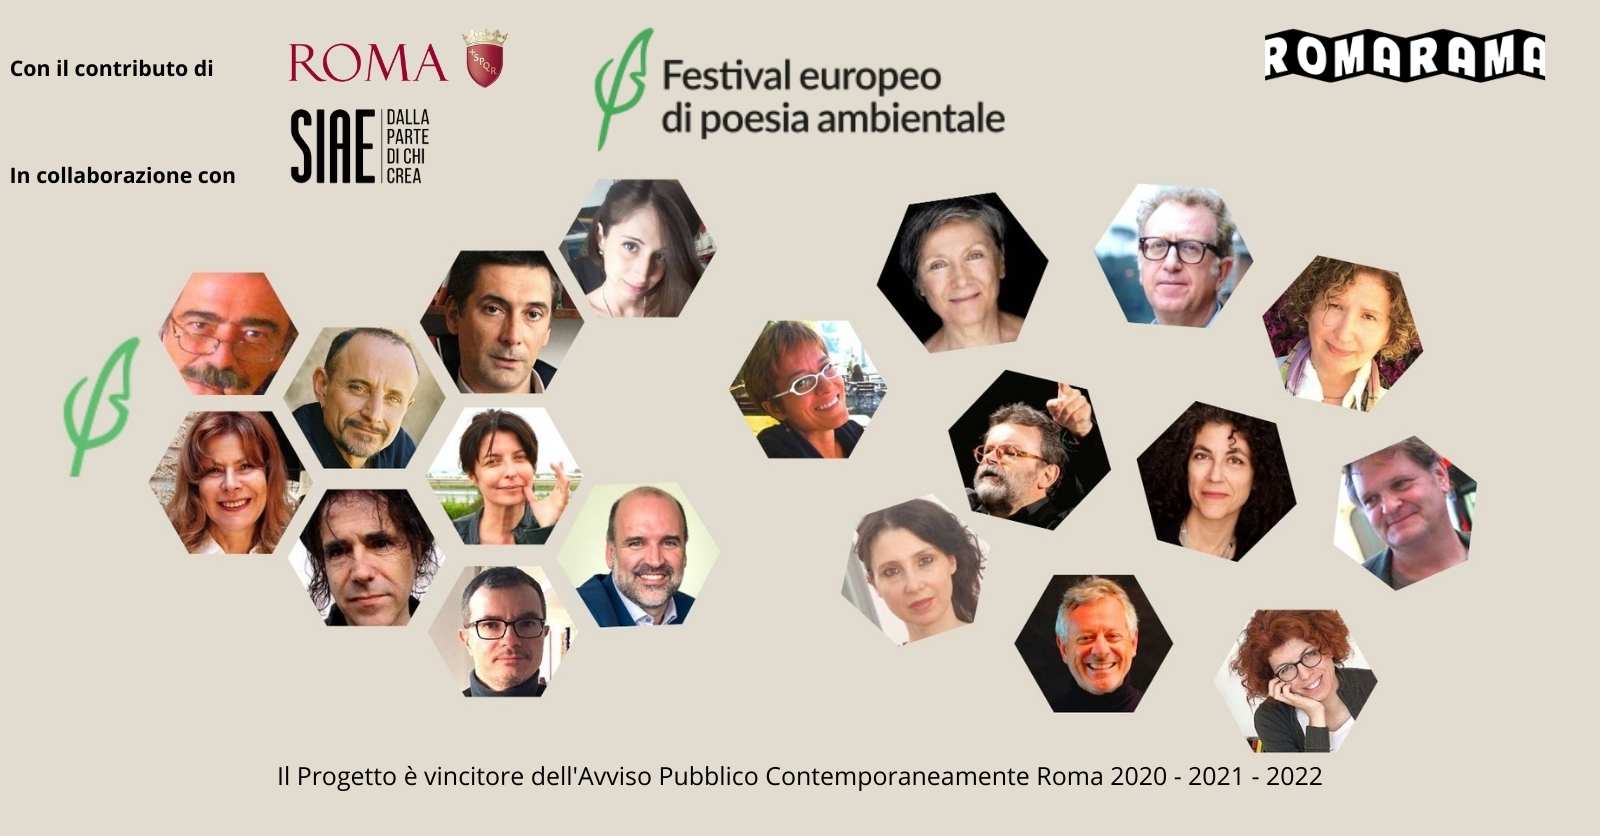 Festival europeo di poesia ambientale